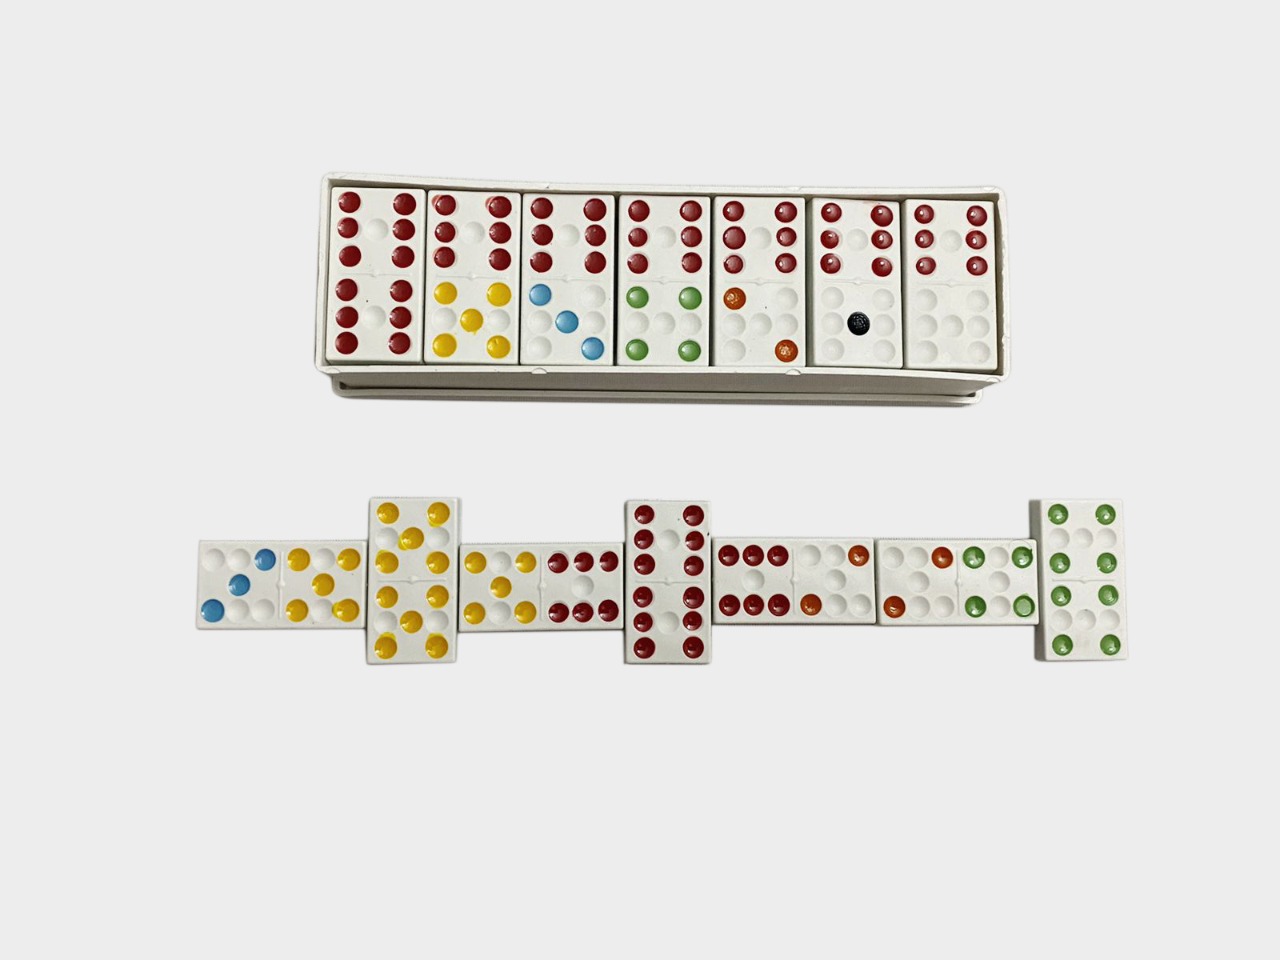 Como jogar dominó 